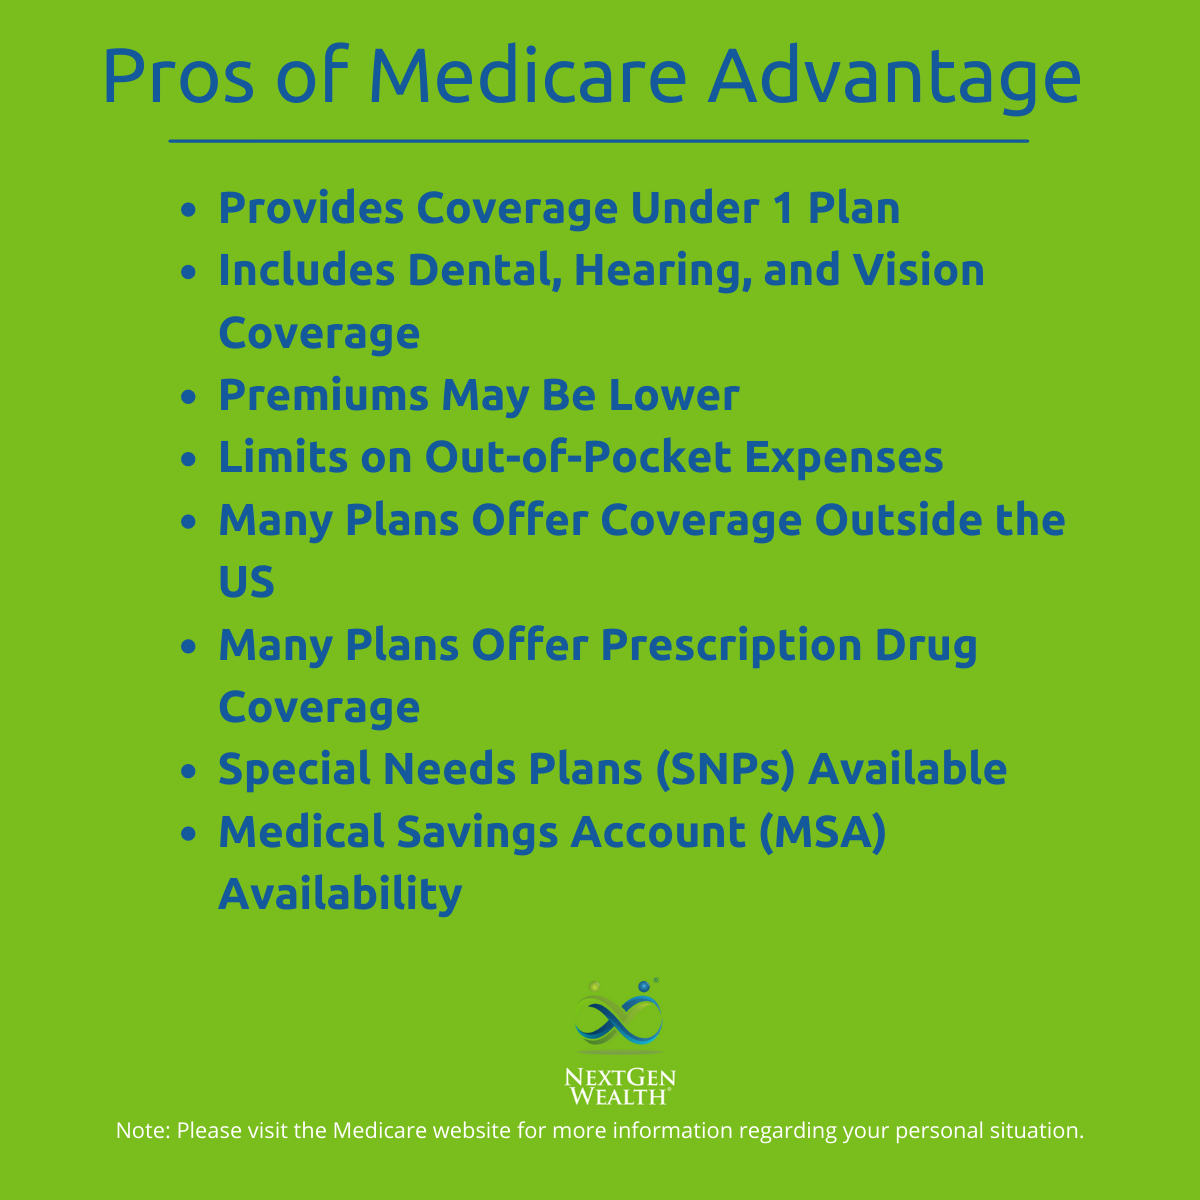 Pros of Medicare Advantage